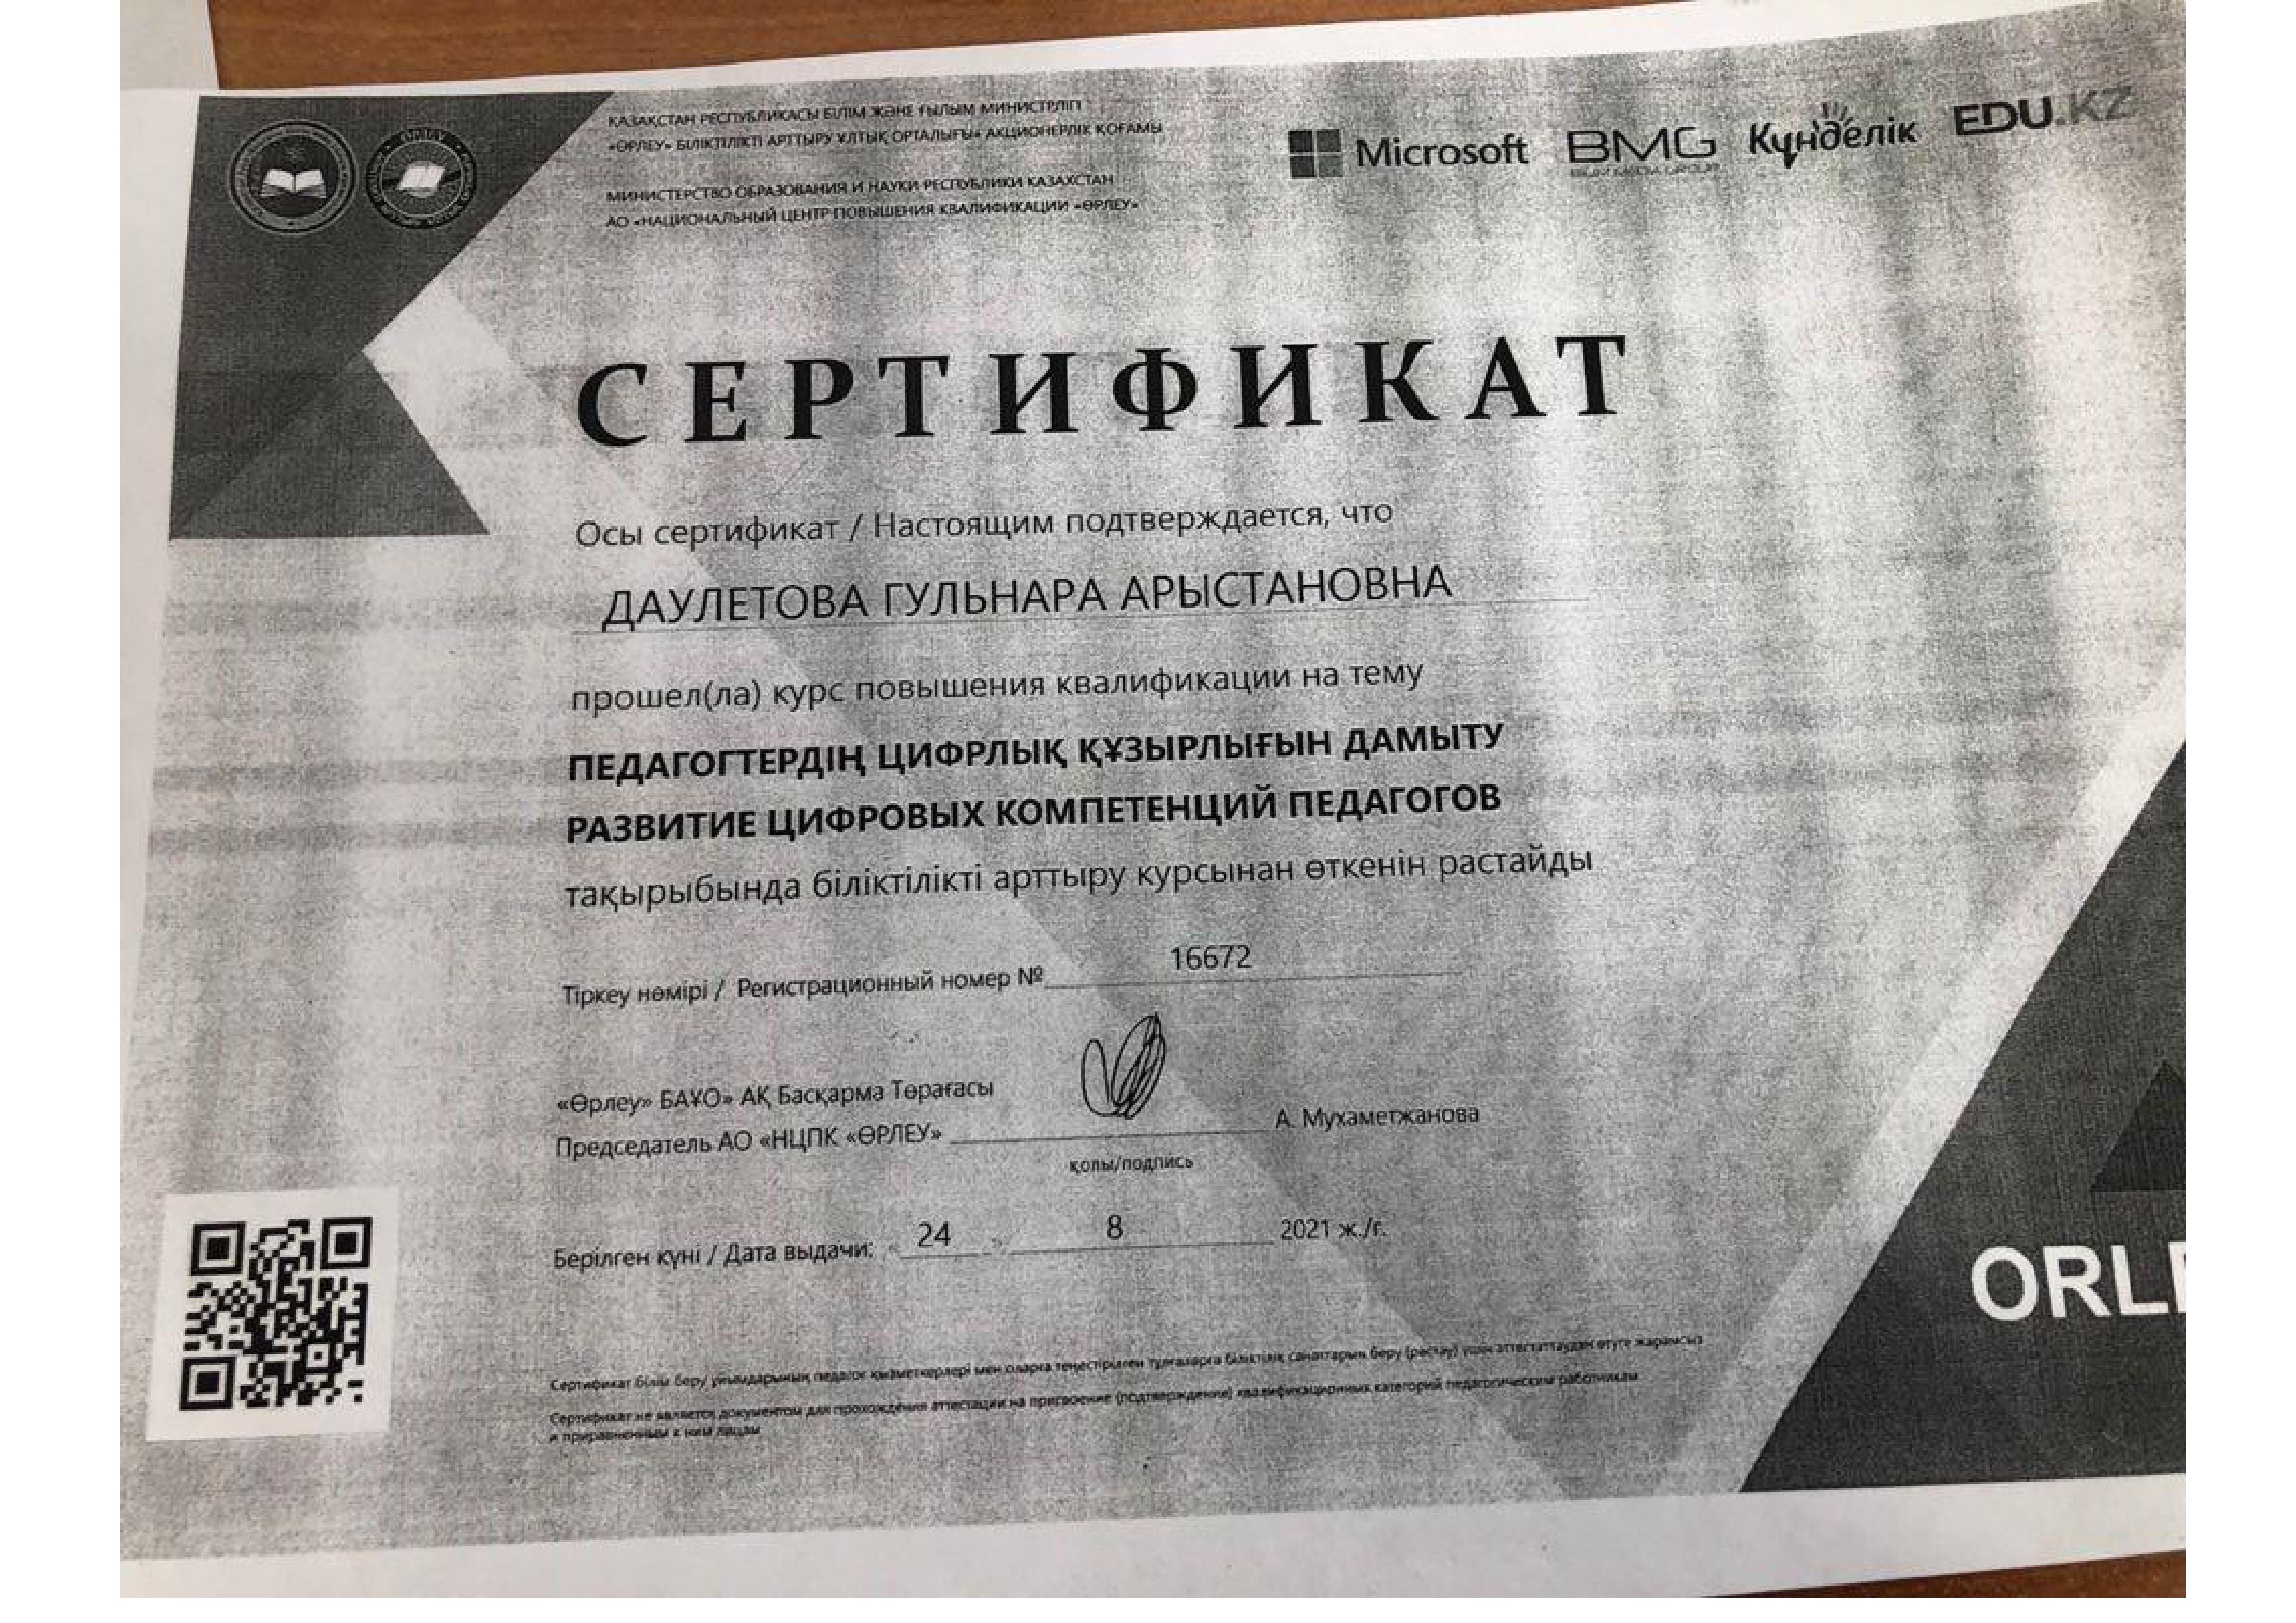 Сертификат, курс повышения квалификации (Даулетова Г. А.)